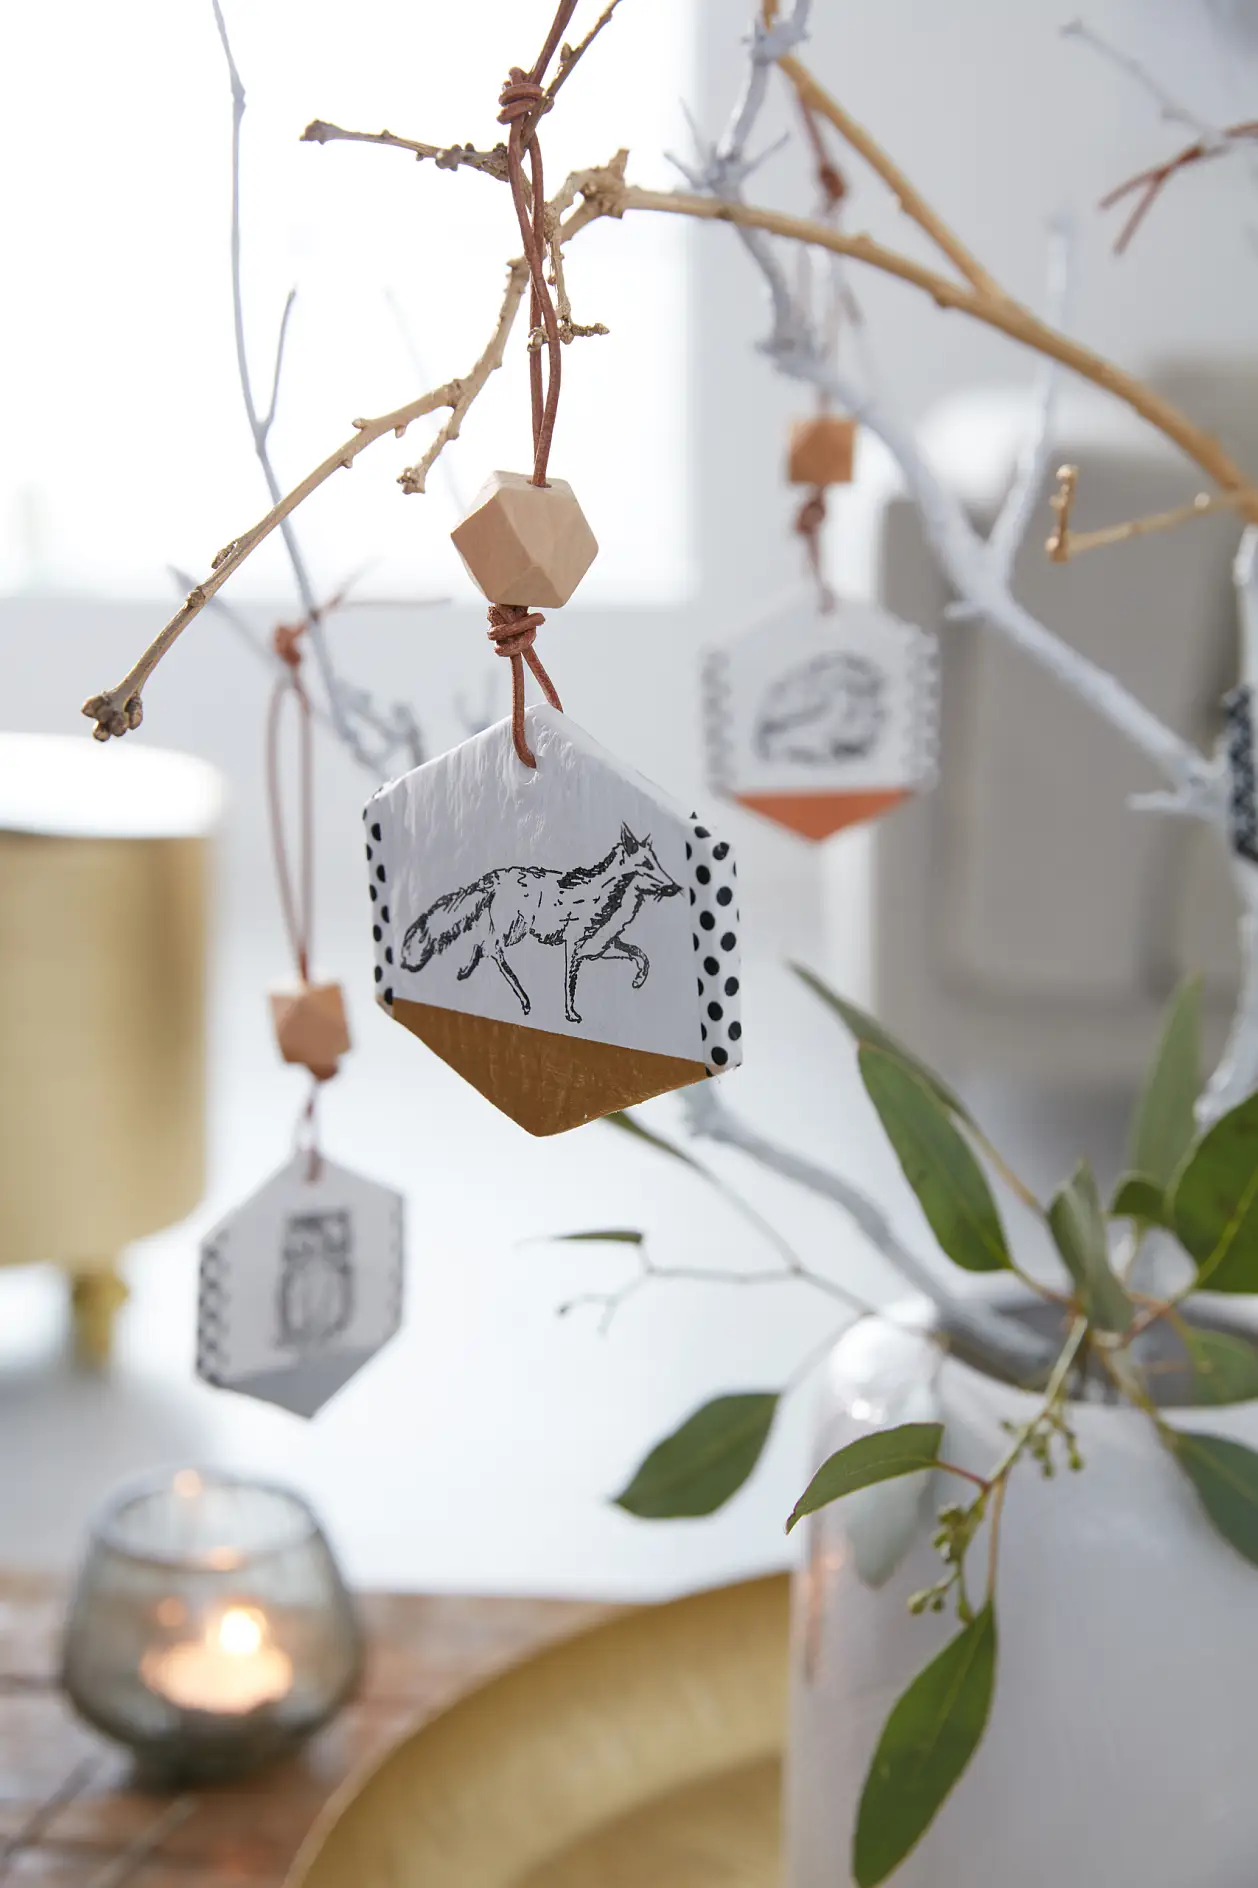 Enjoy you self-made ornaments!